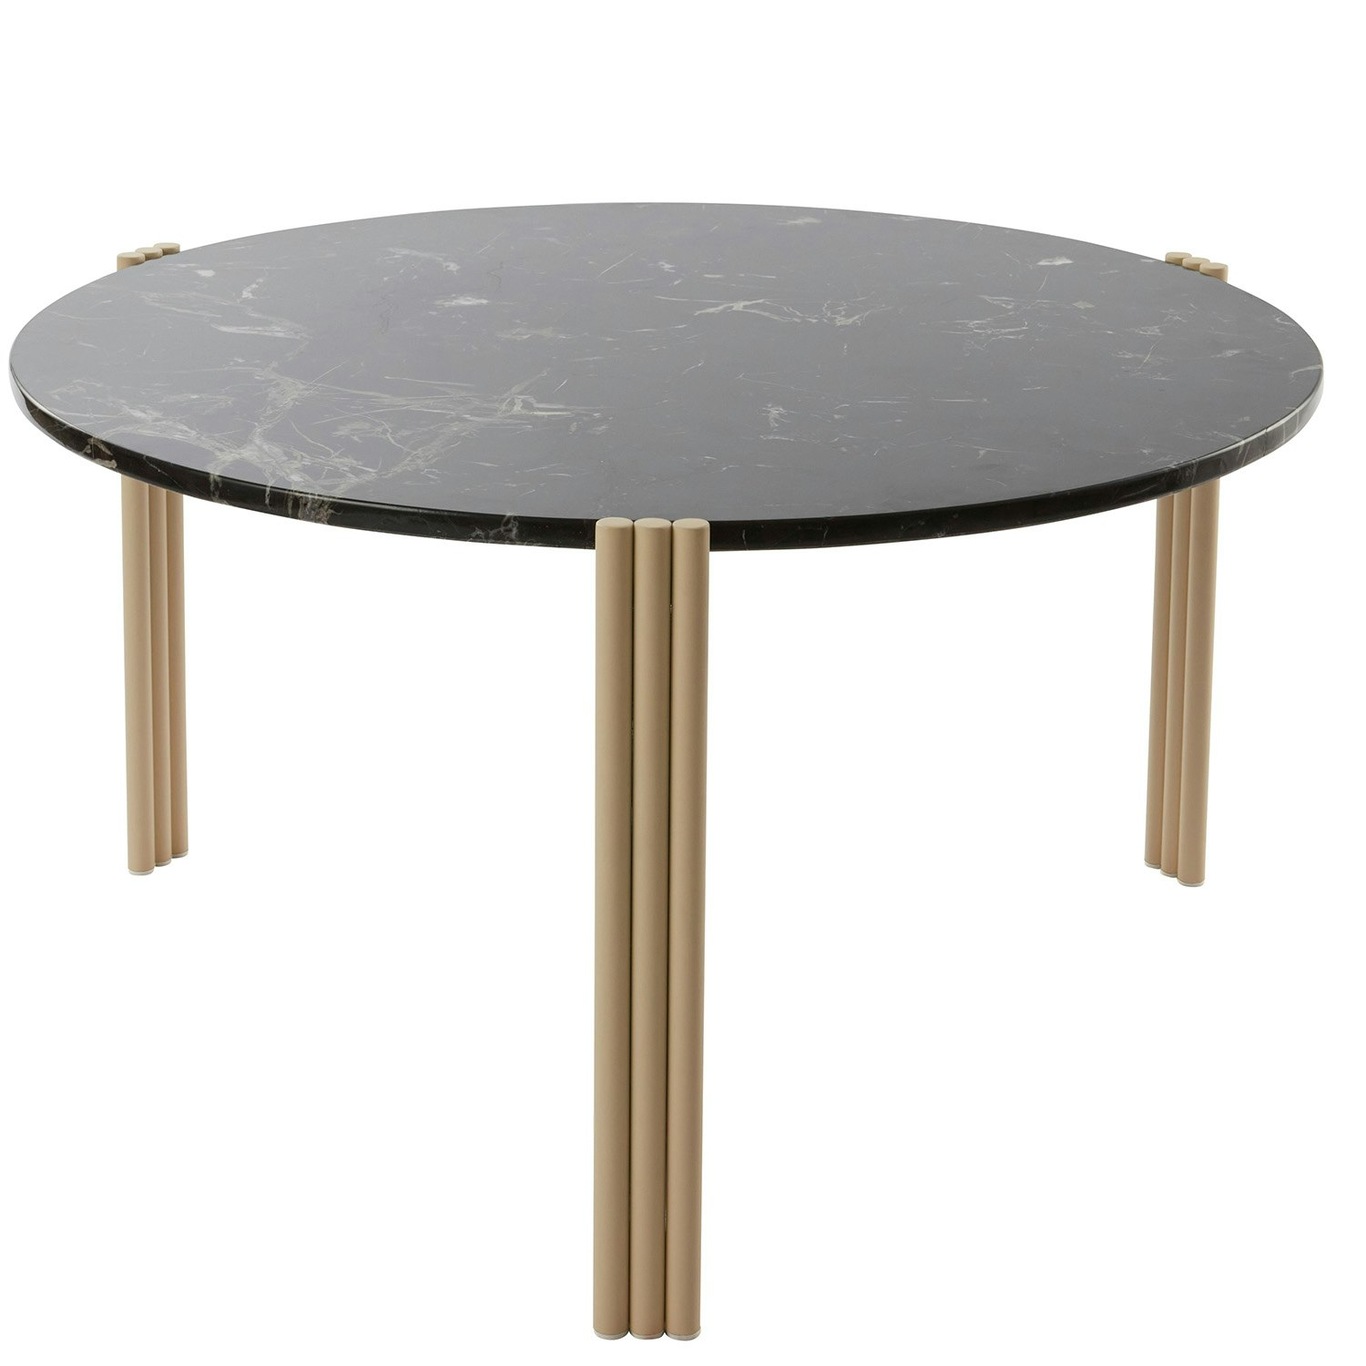 Tribus Soffbord, Gjort av stål 80 cm, Svart/Sand